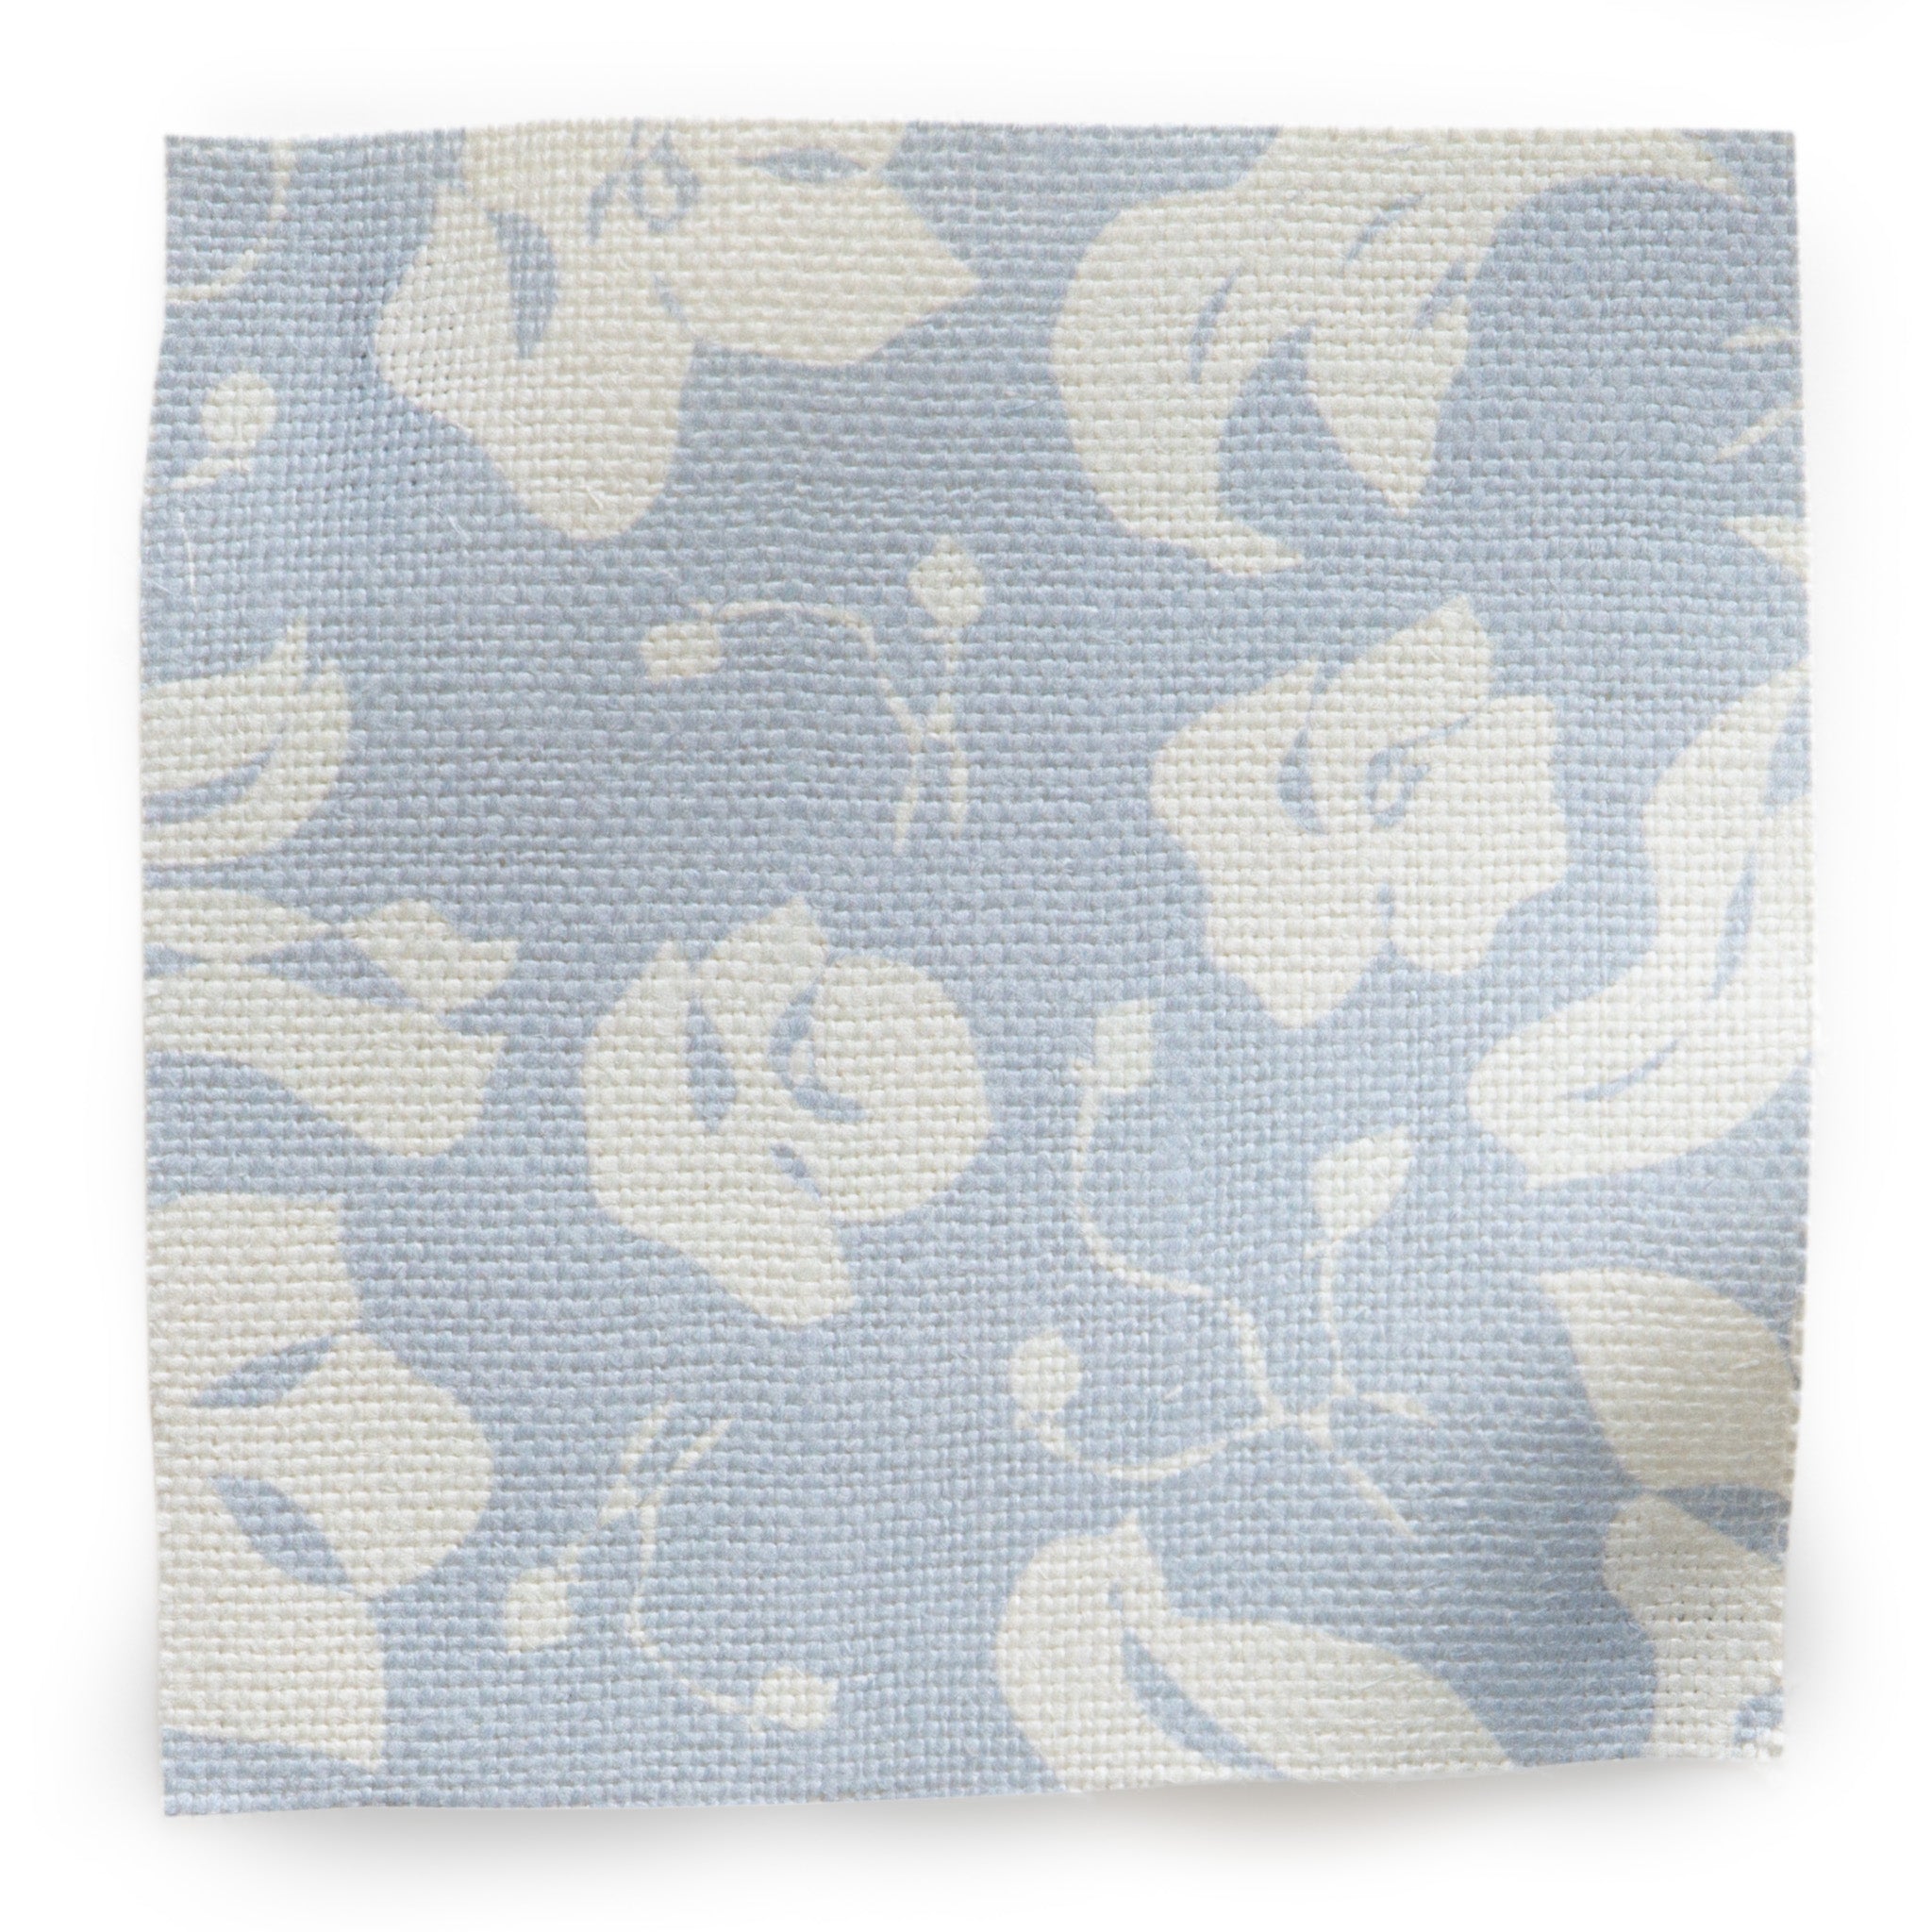 Cornflower Blue Floral Printed Linen Swatch